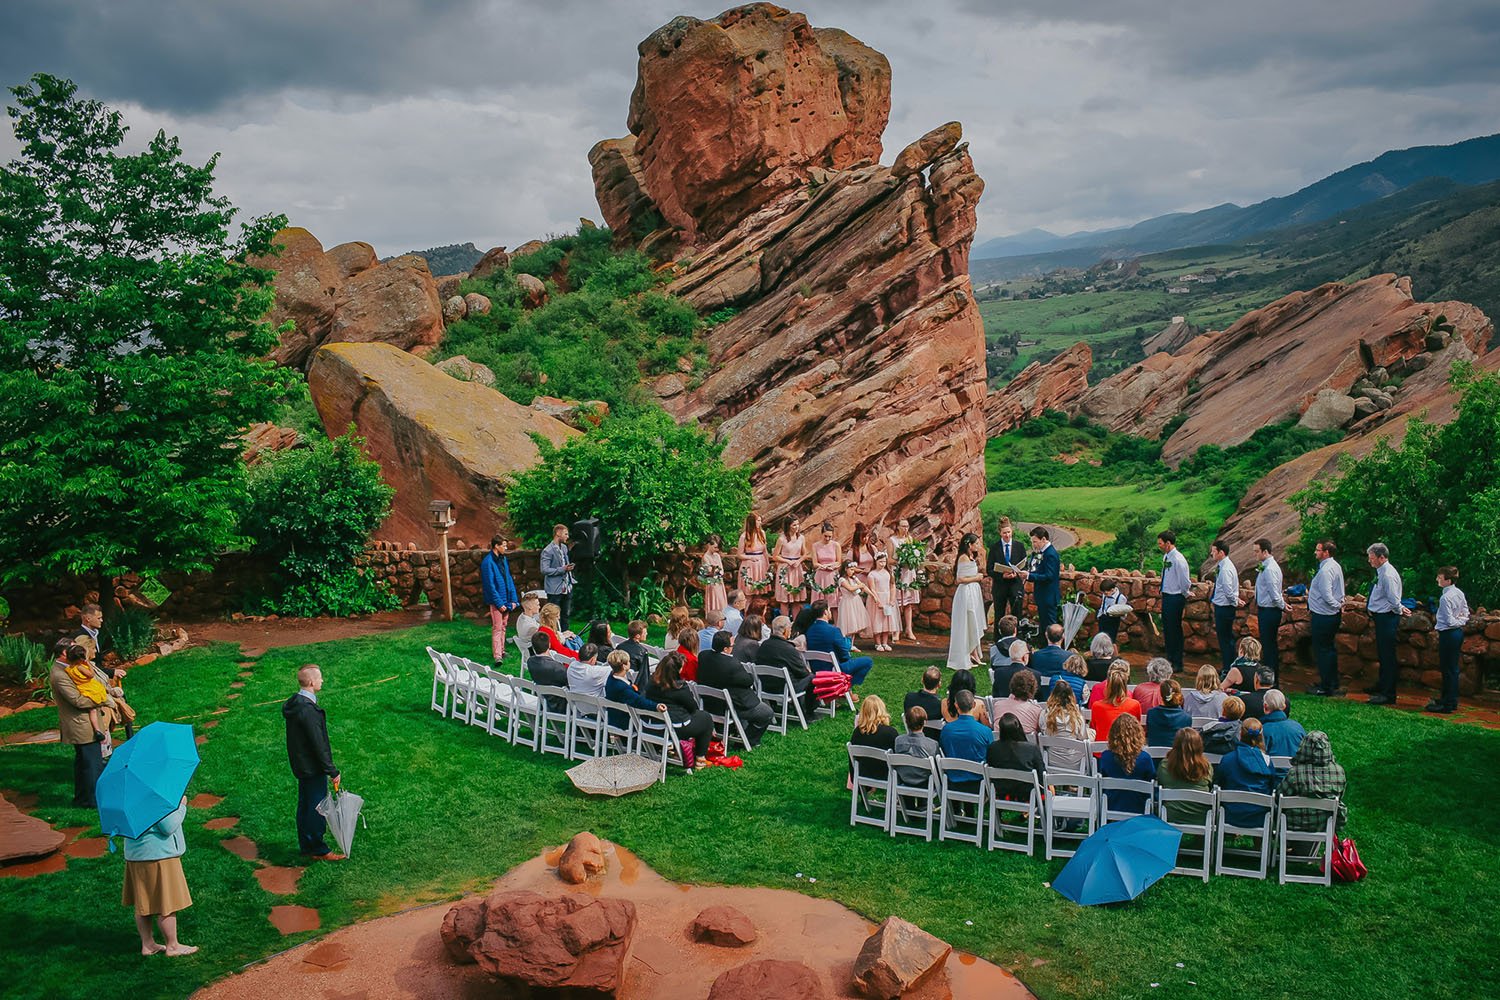 Heritage Eagle Bend Golf Club Aurora Weddings Denver Wedding Venues…